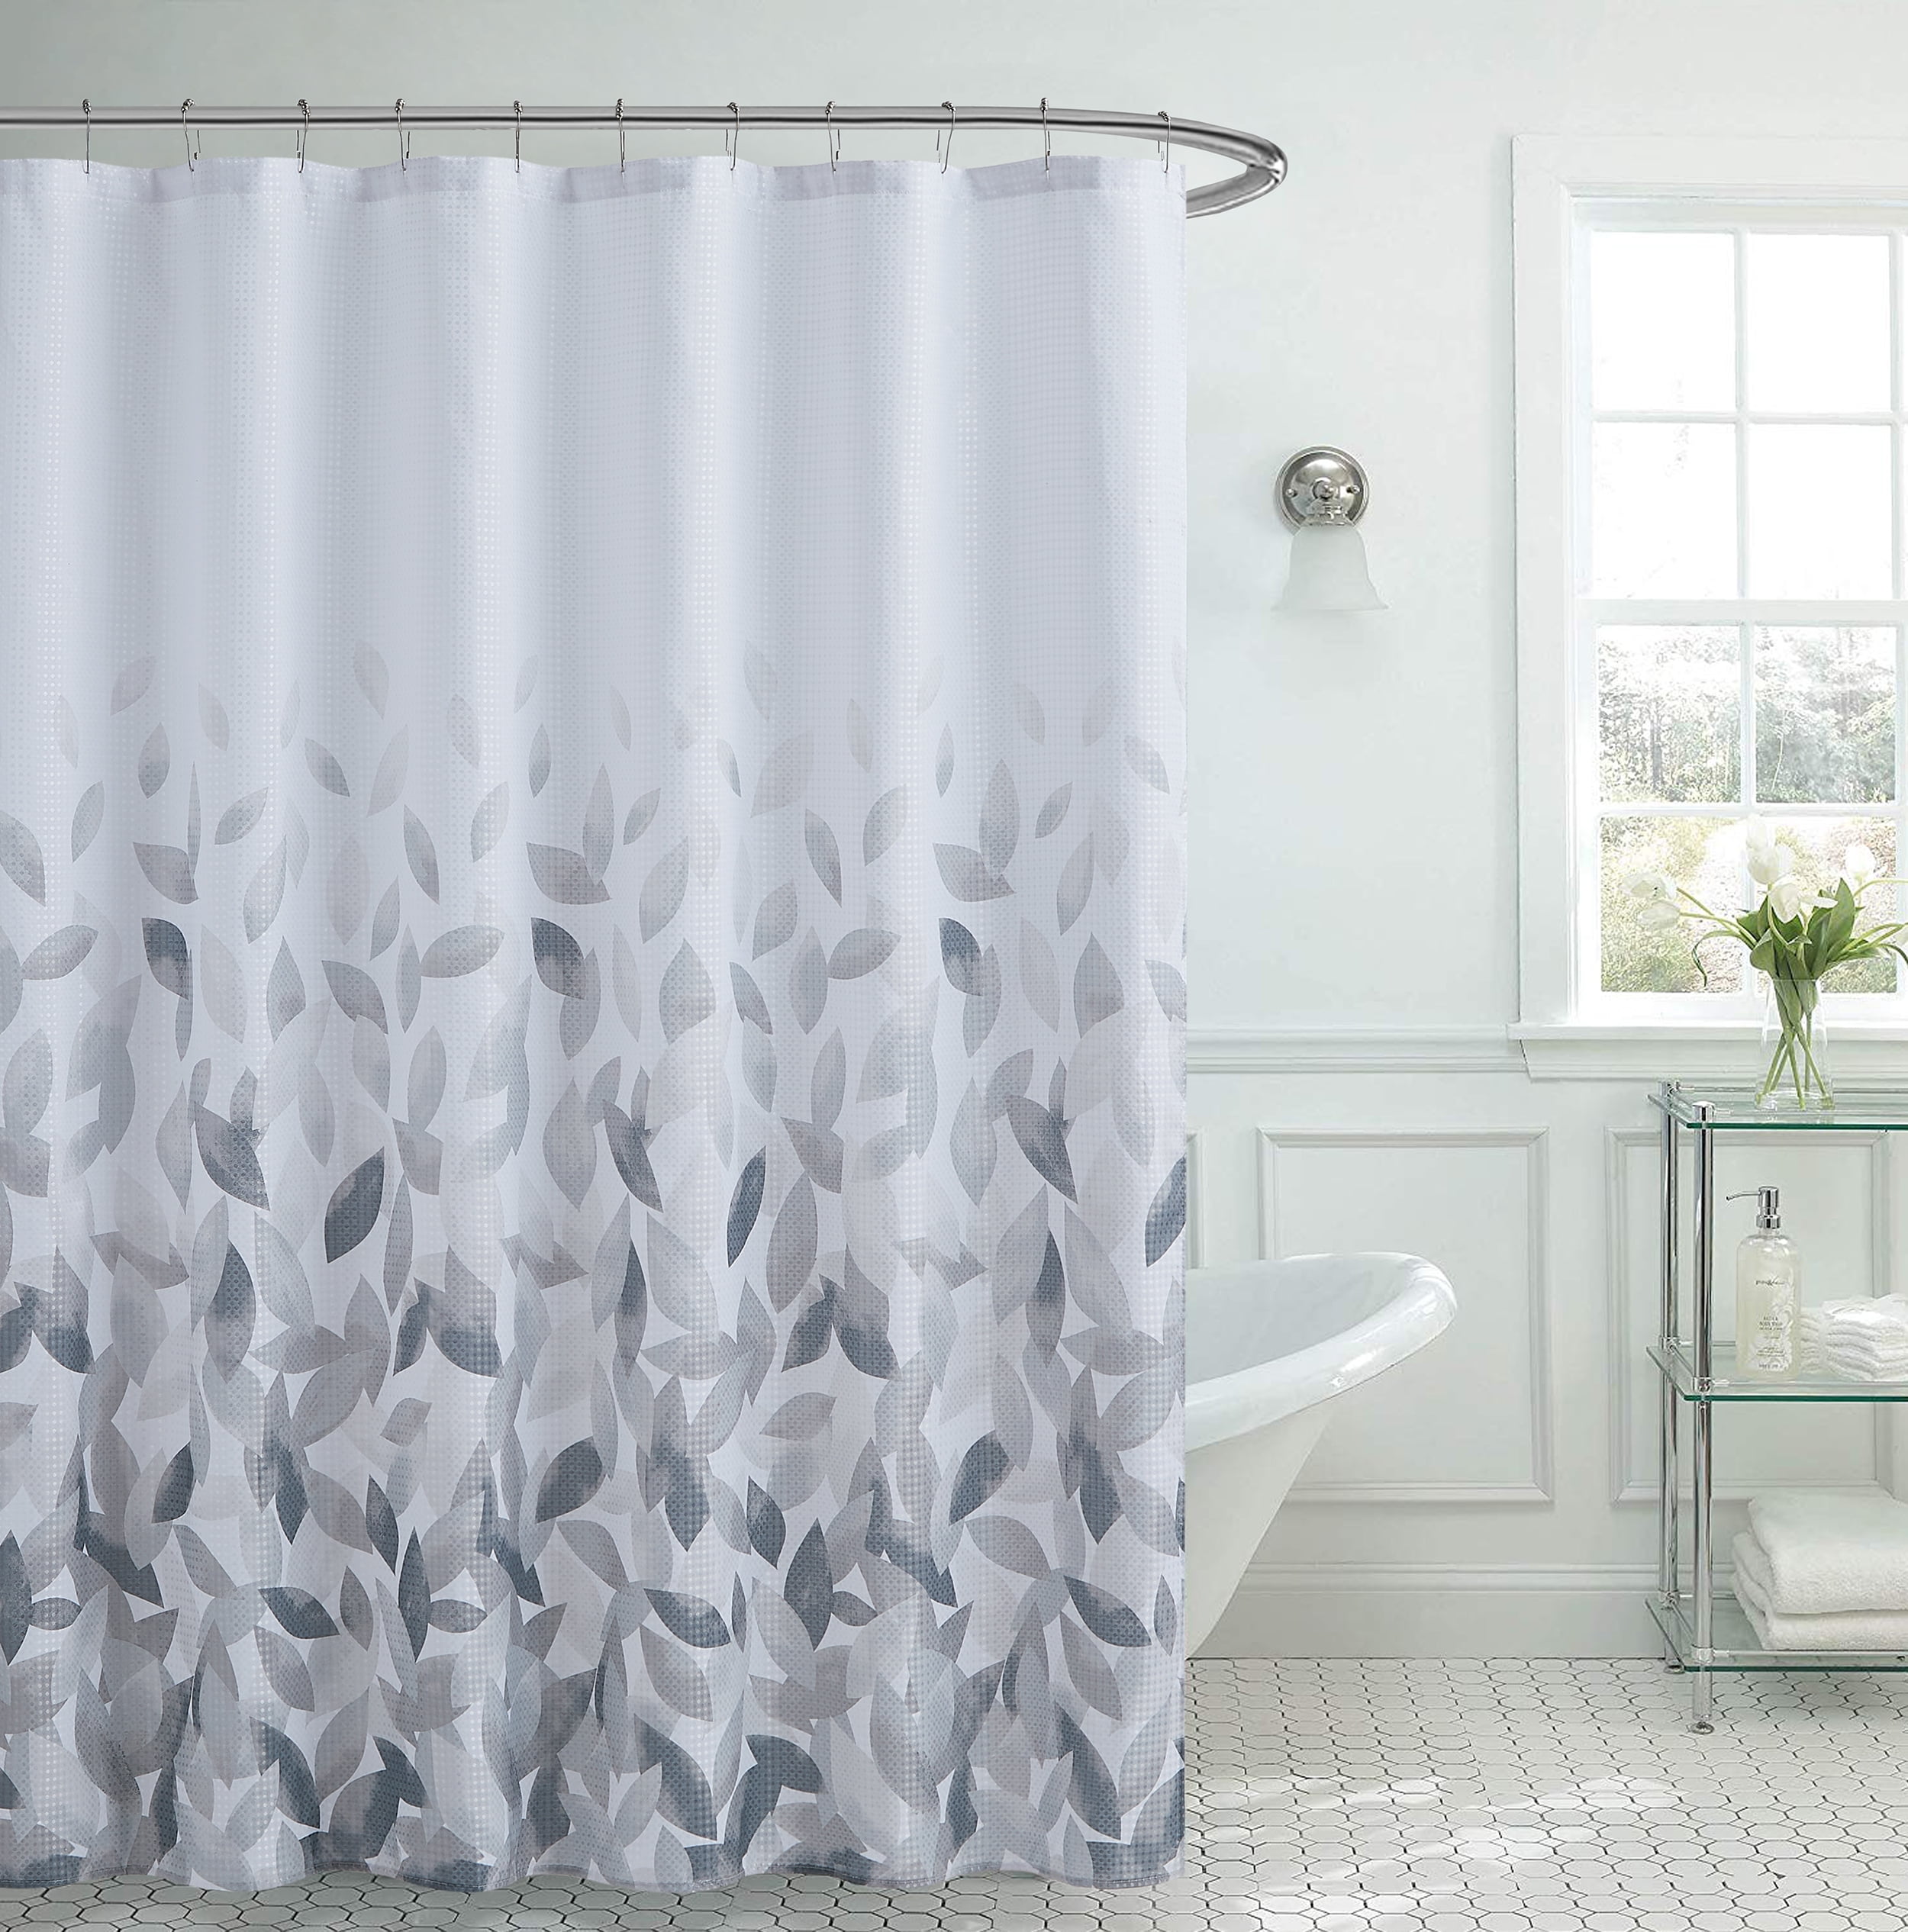 Lavender & Bird In The Bathtub Shower Curtain Fresh and Simple Bathroom Fabric 